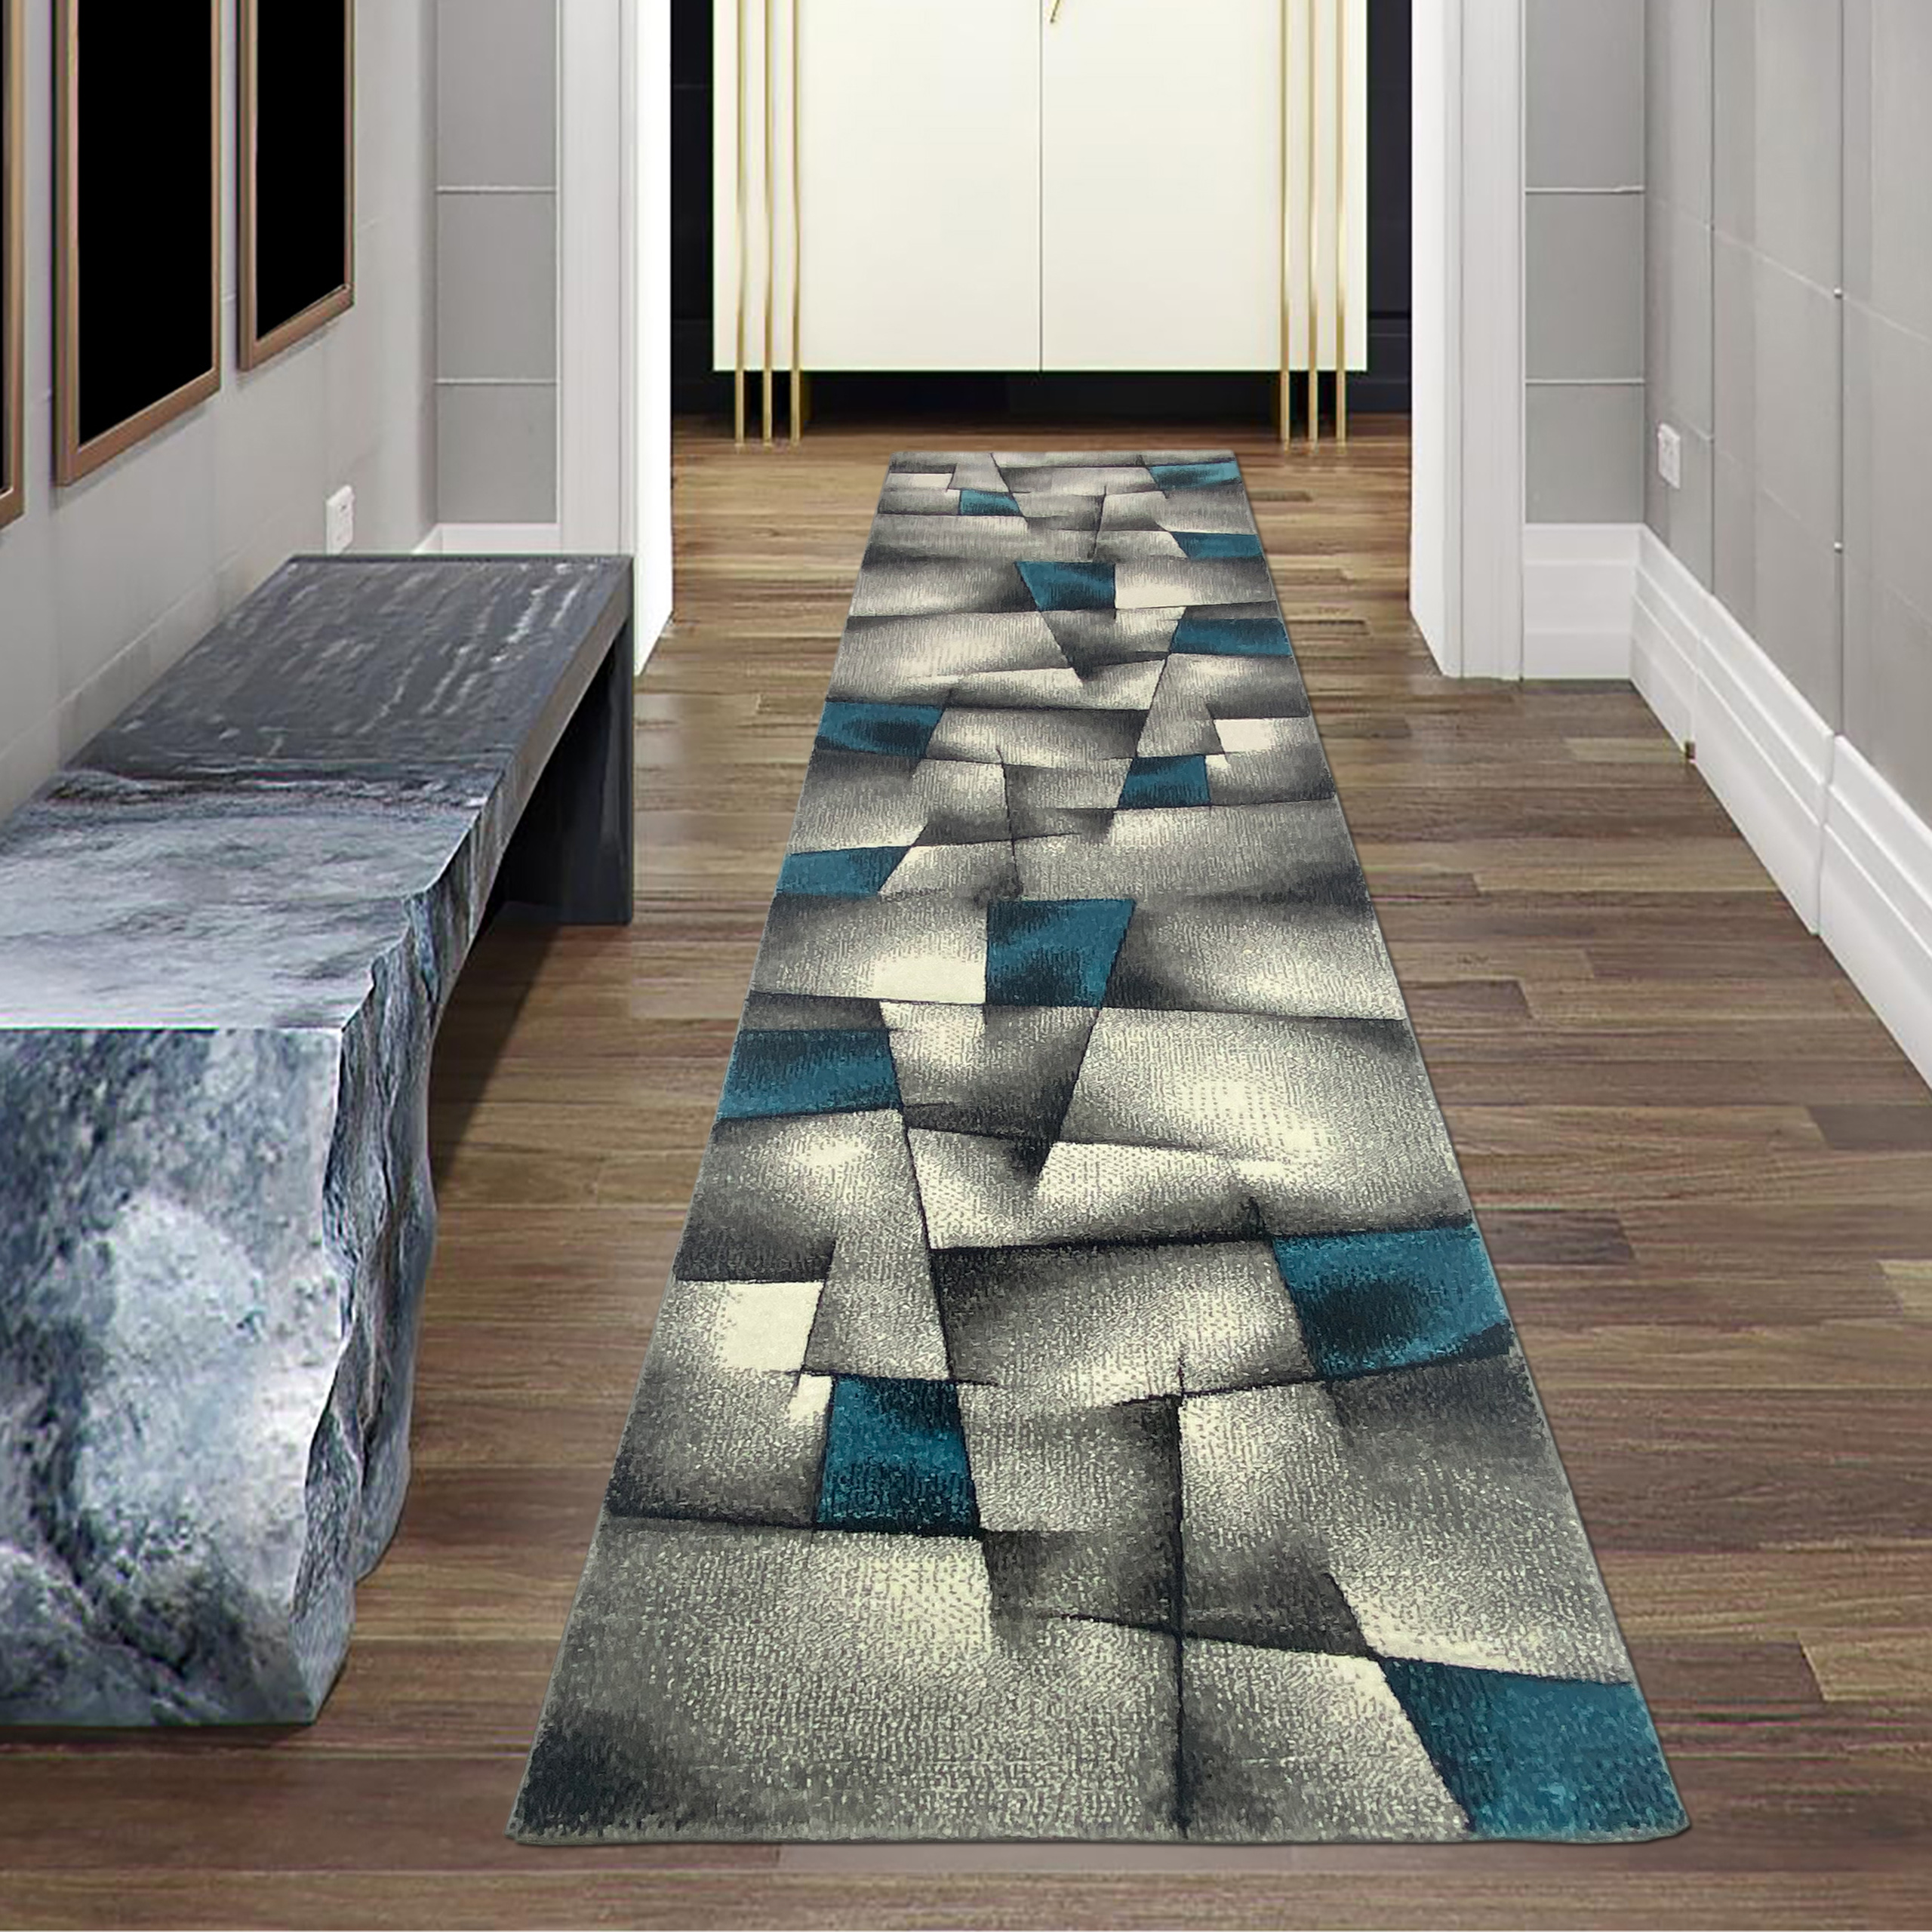 -Traum carpets: & designer Teppich and at - dreams Modern cheap carpet High-quality